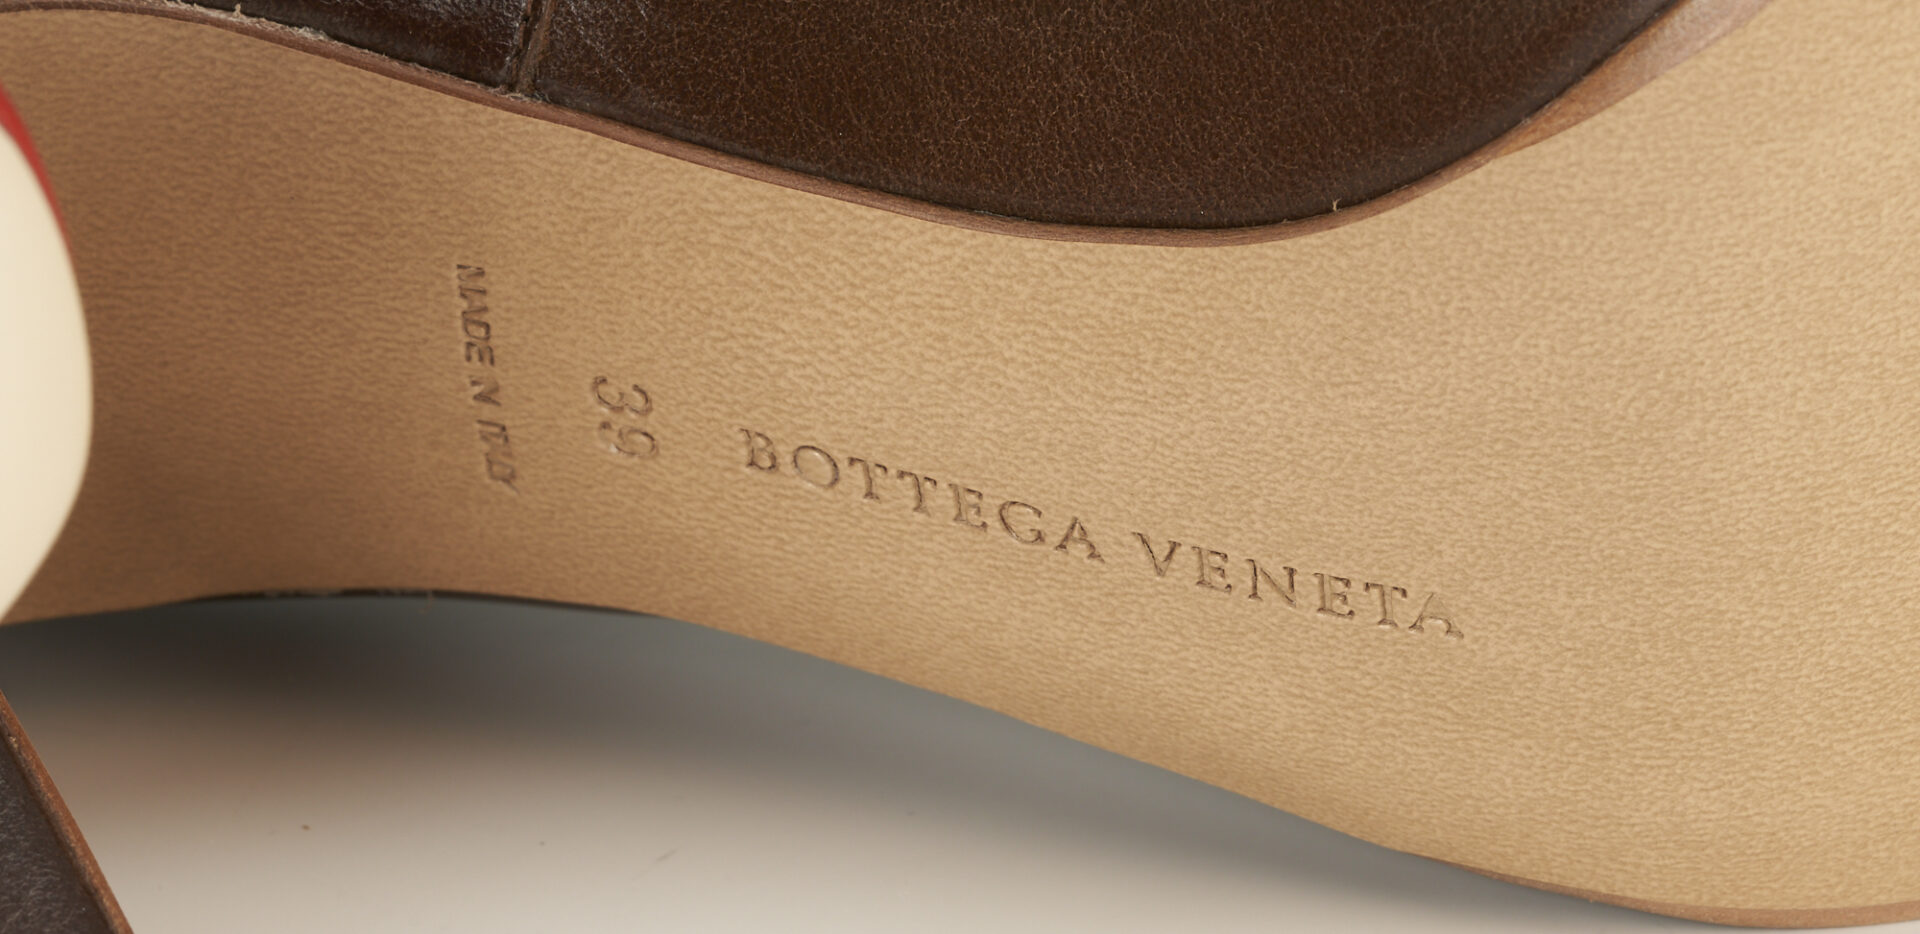 Lot 115: 4 Pairs of Bottega Veneta Pumps